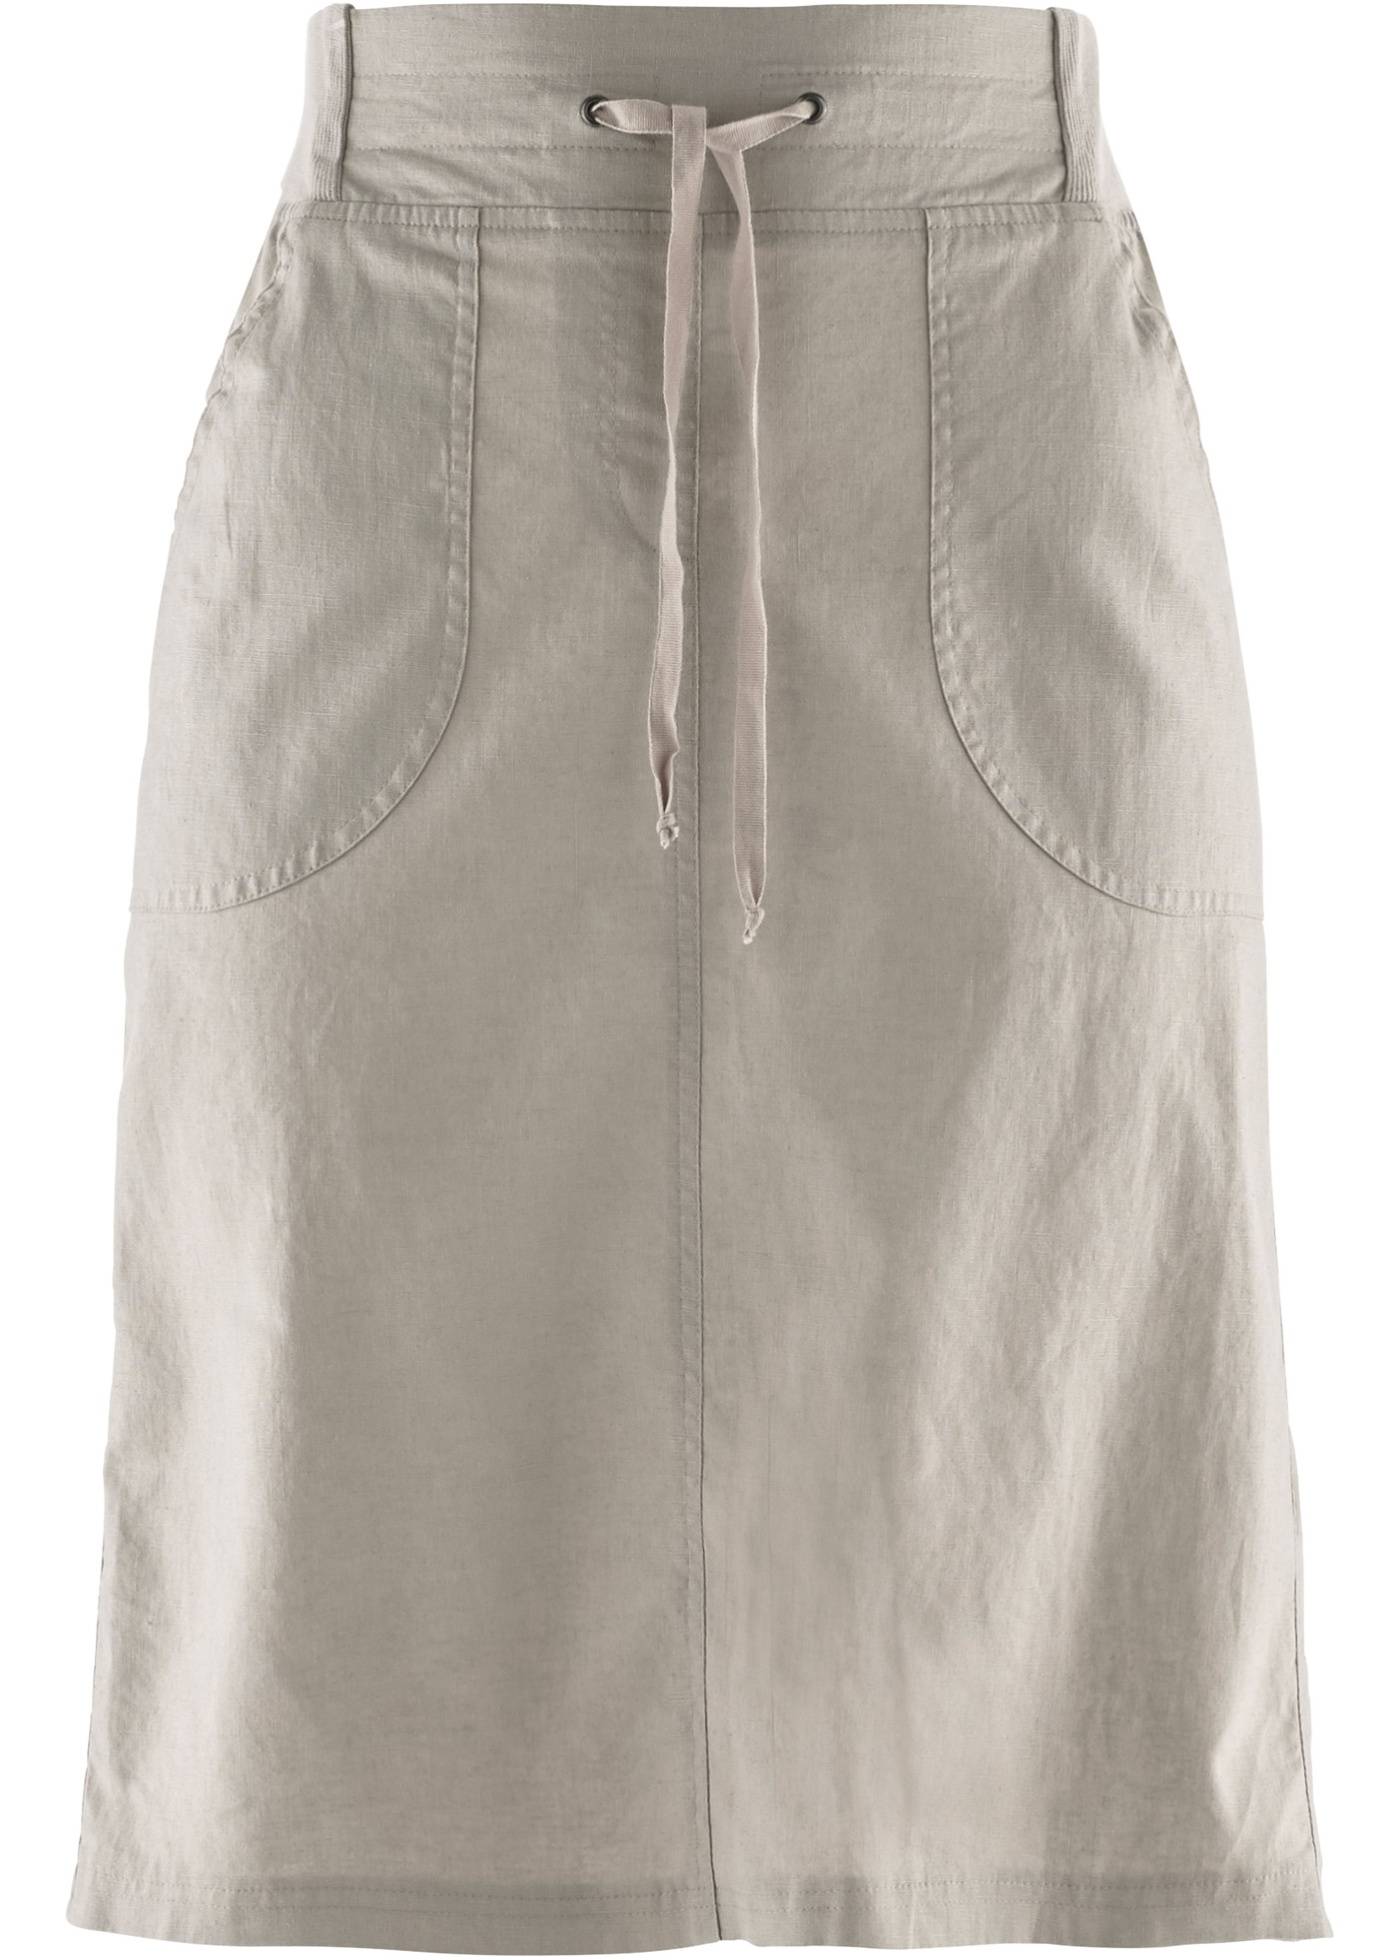 Fid005089 bpc bonprix collection юбка серая вельвет